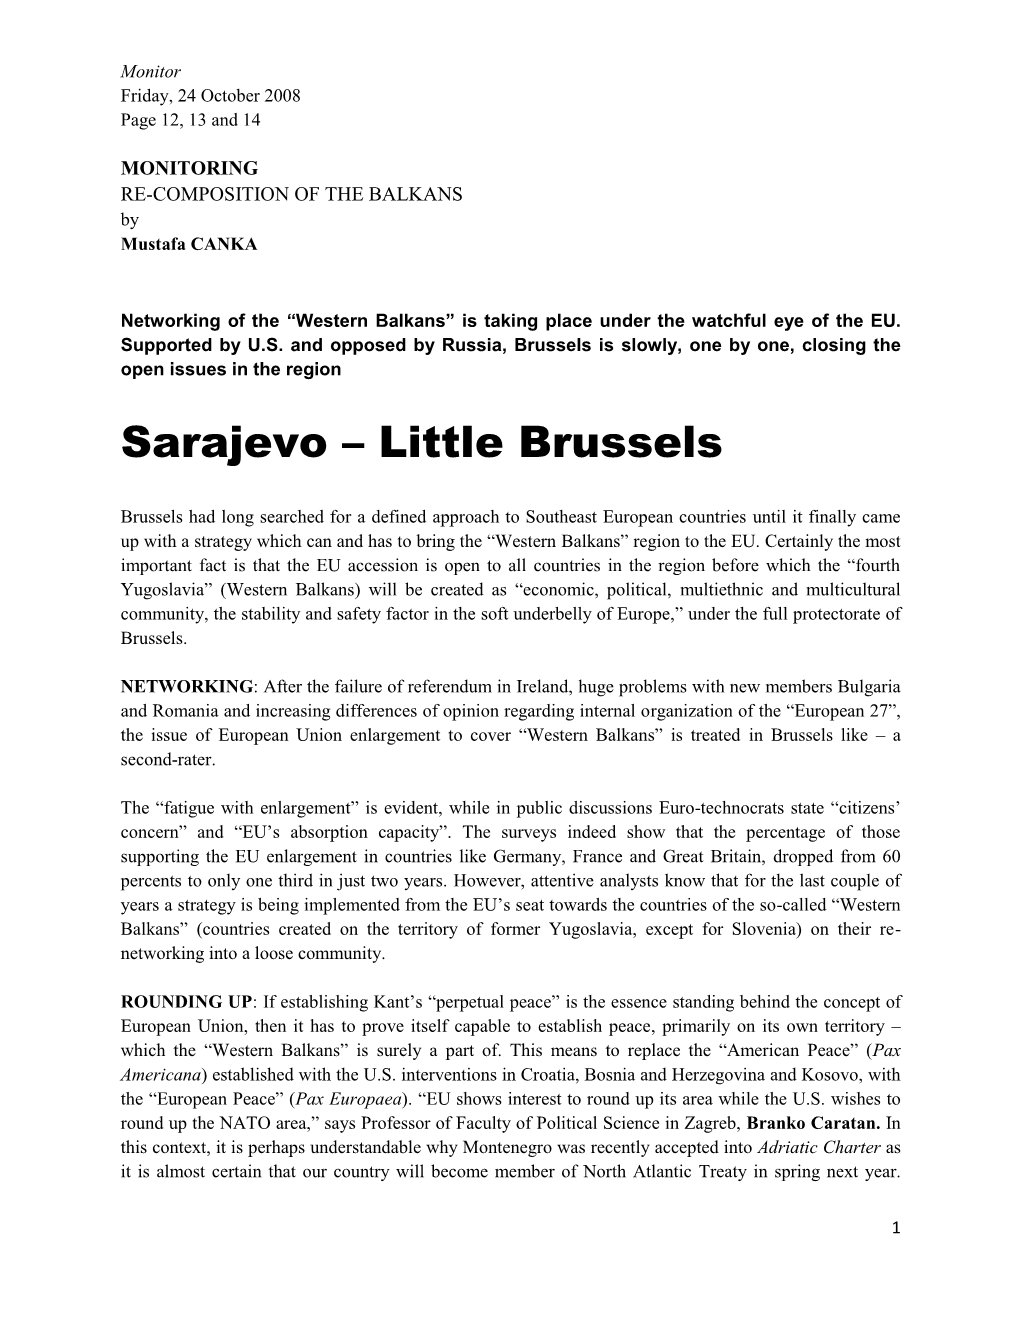 Sarajevo – Little Brussels